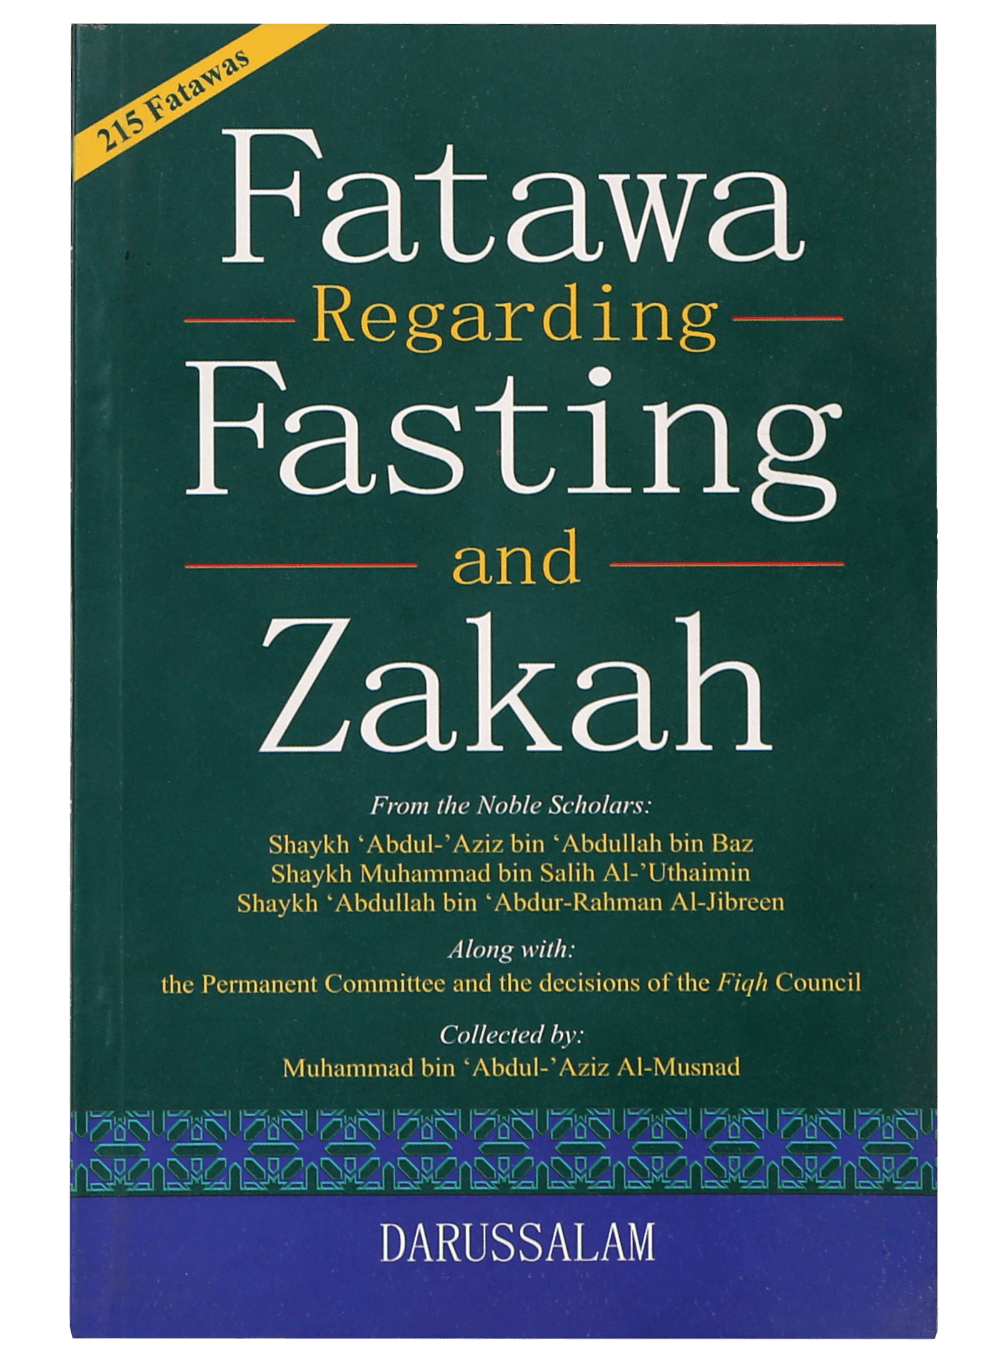 fatawa-regarding-fasting-and-zakah-darussalam-20180312-181018